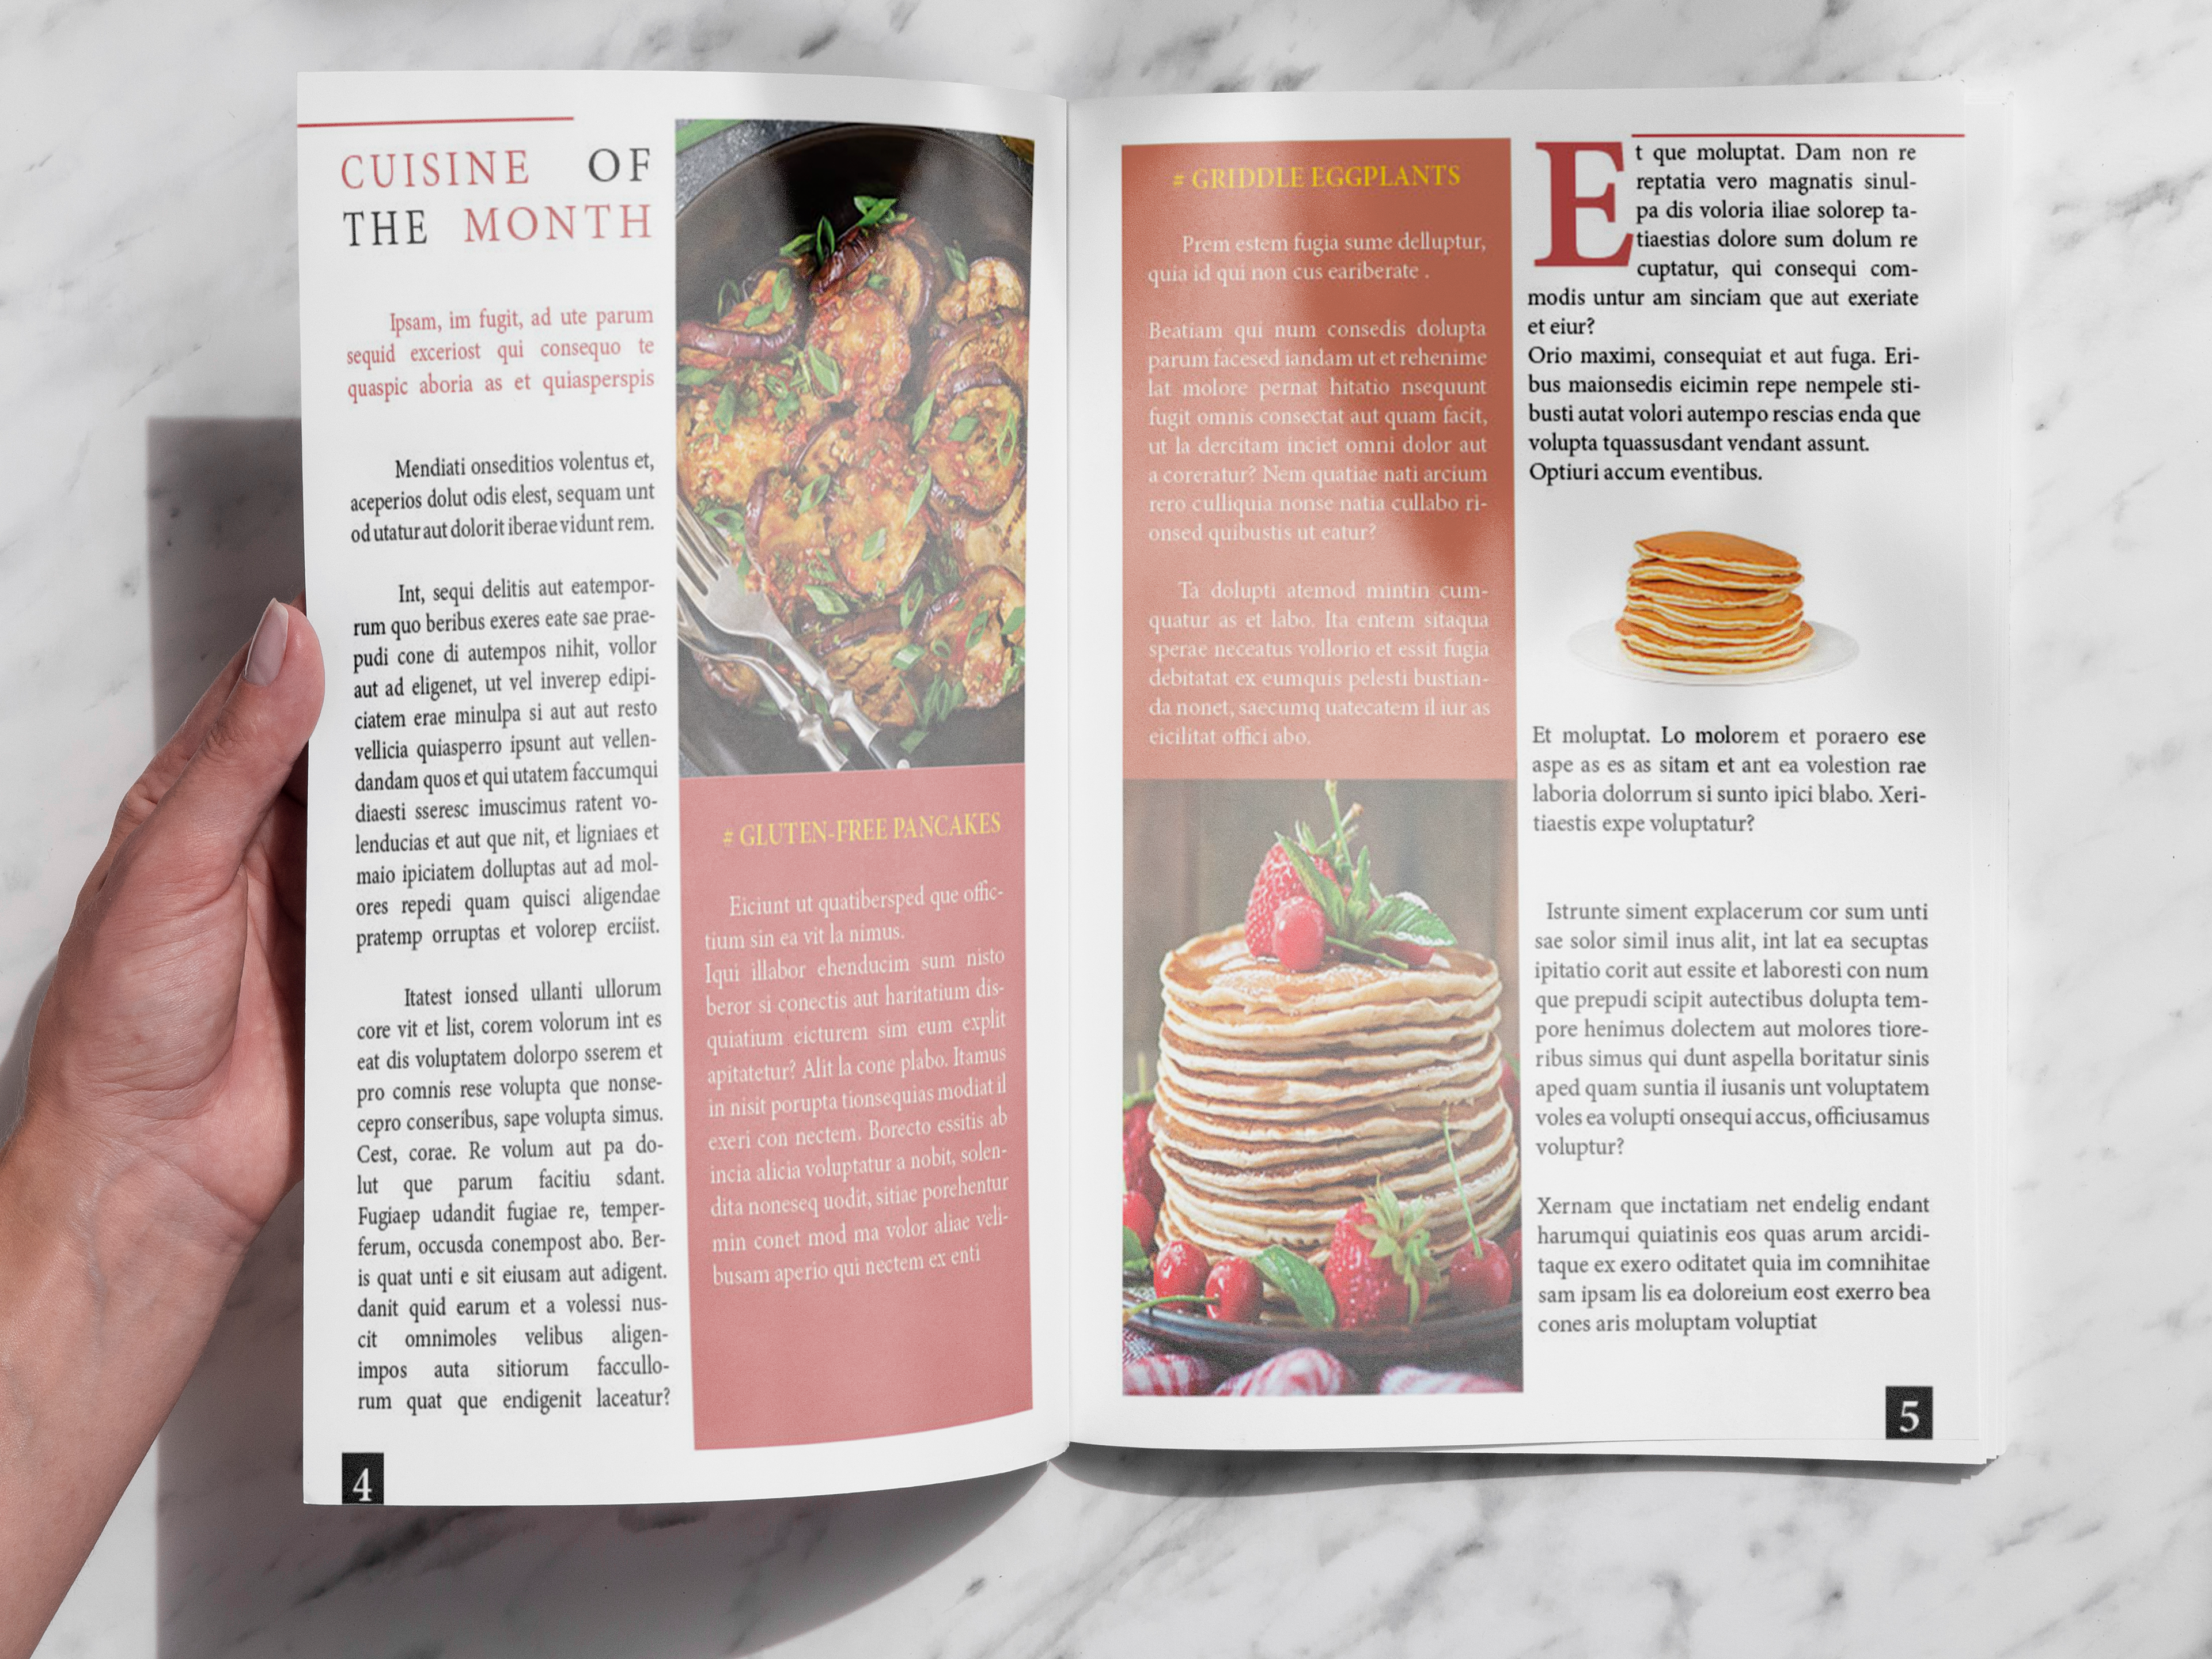 inside food magazine